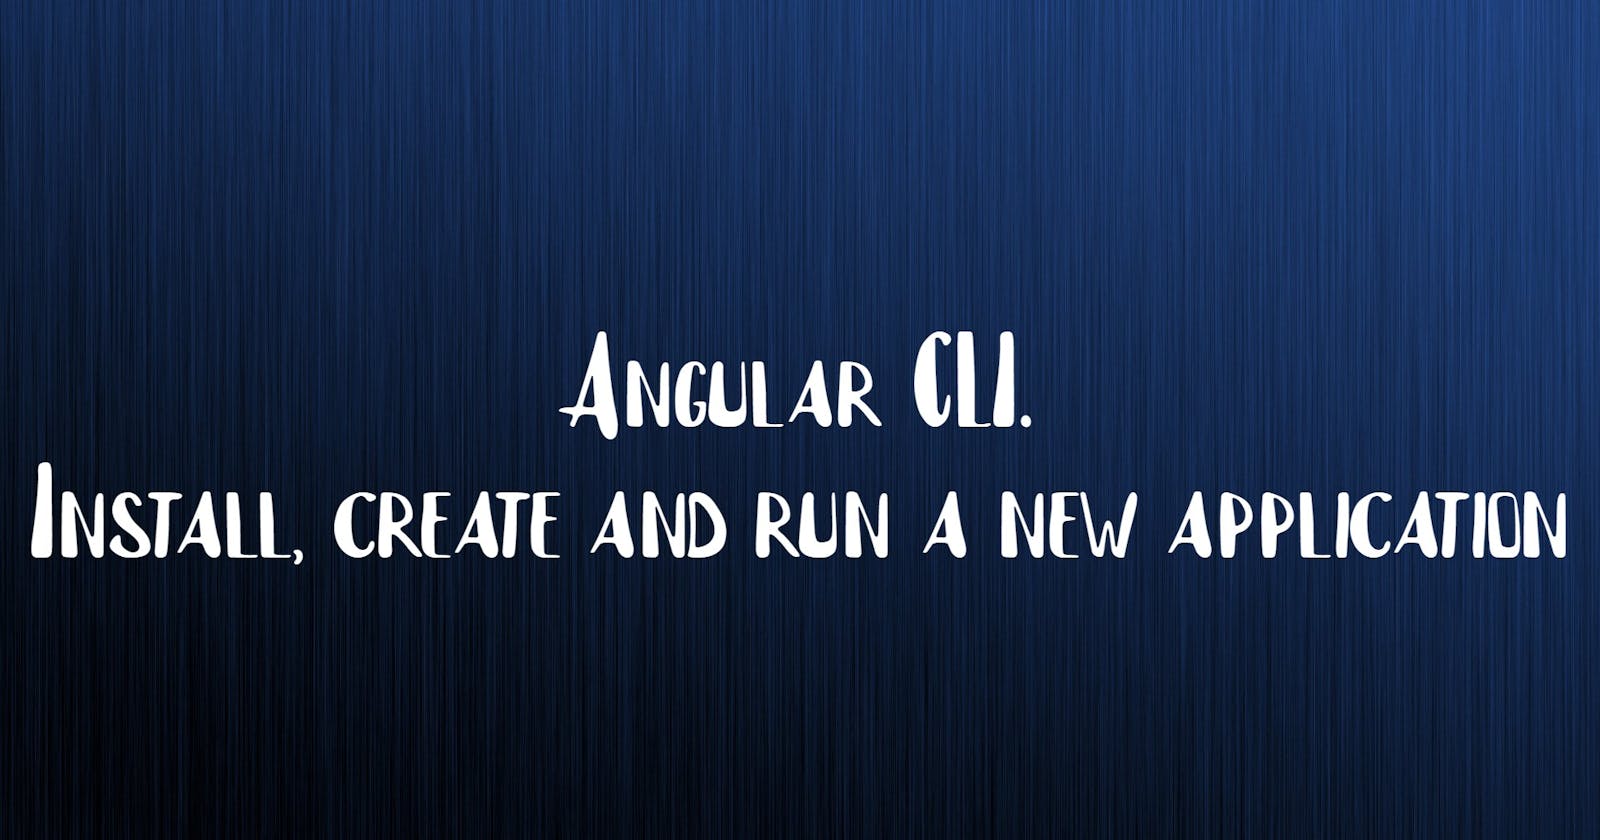 Angular CLI. Install, create and run a new application